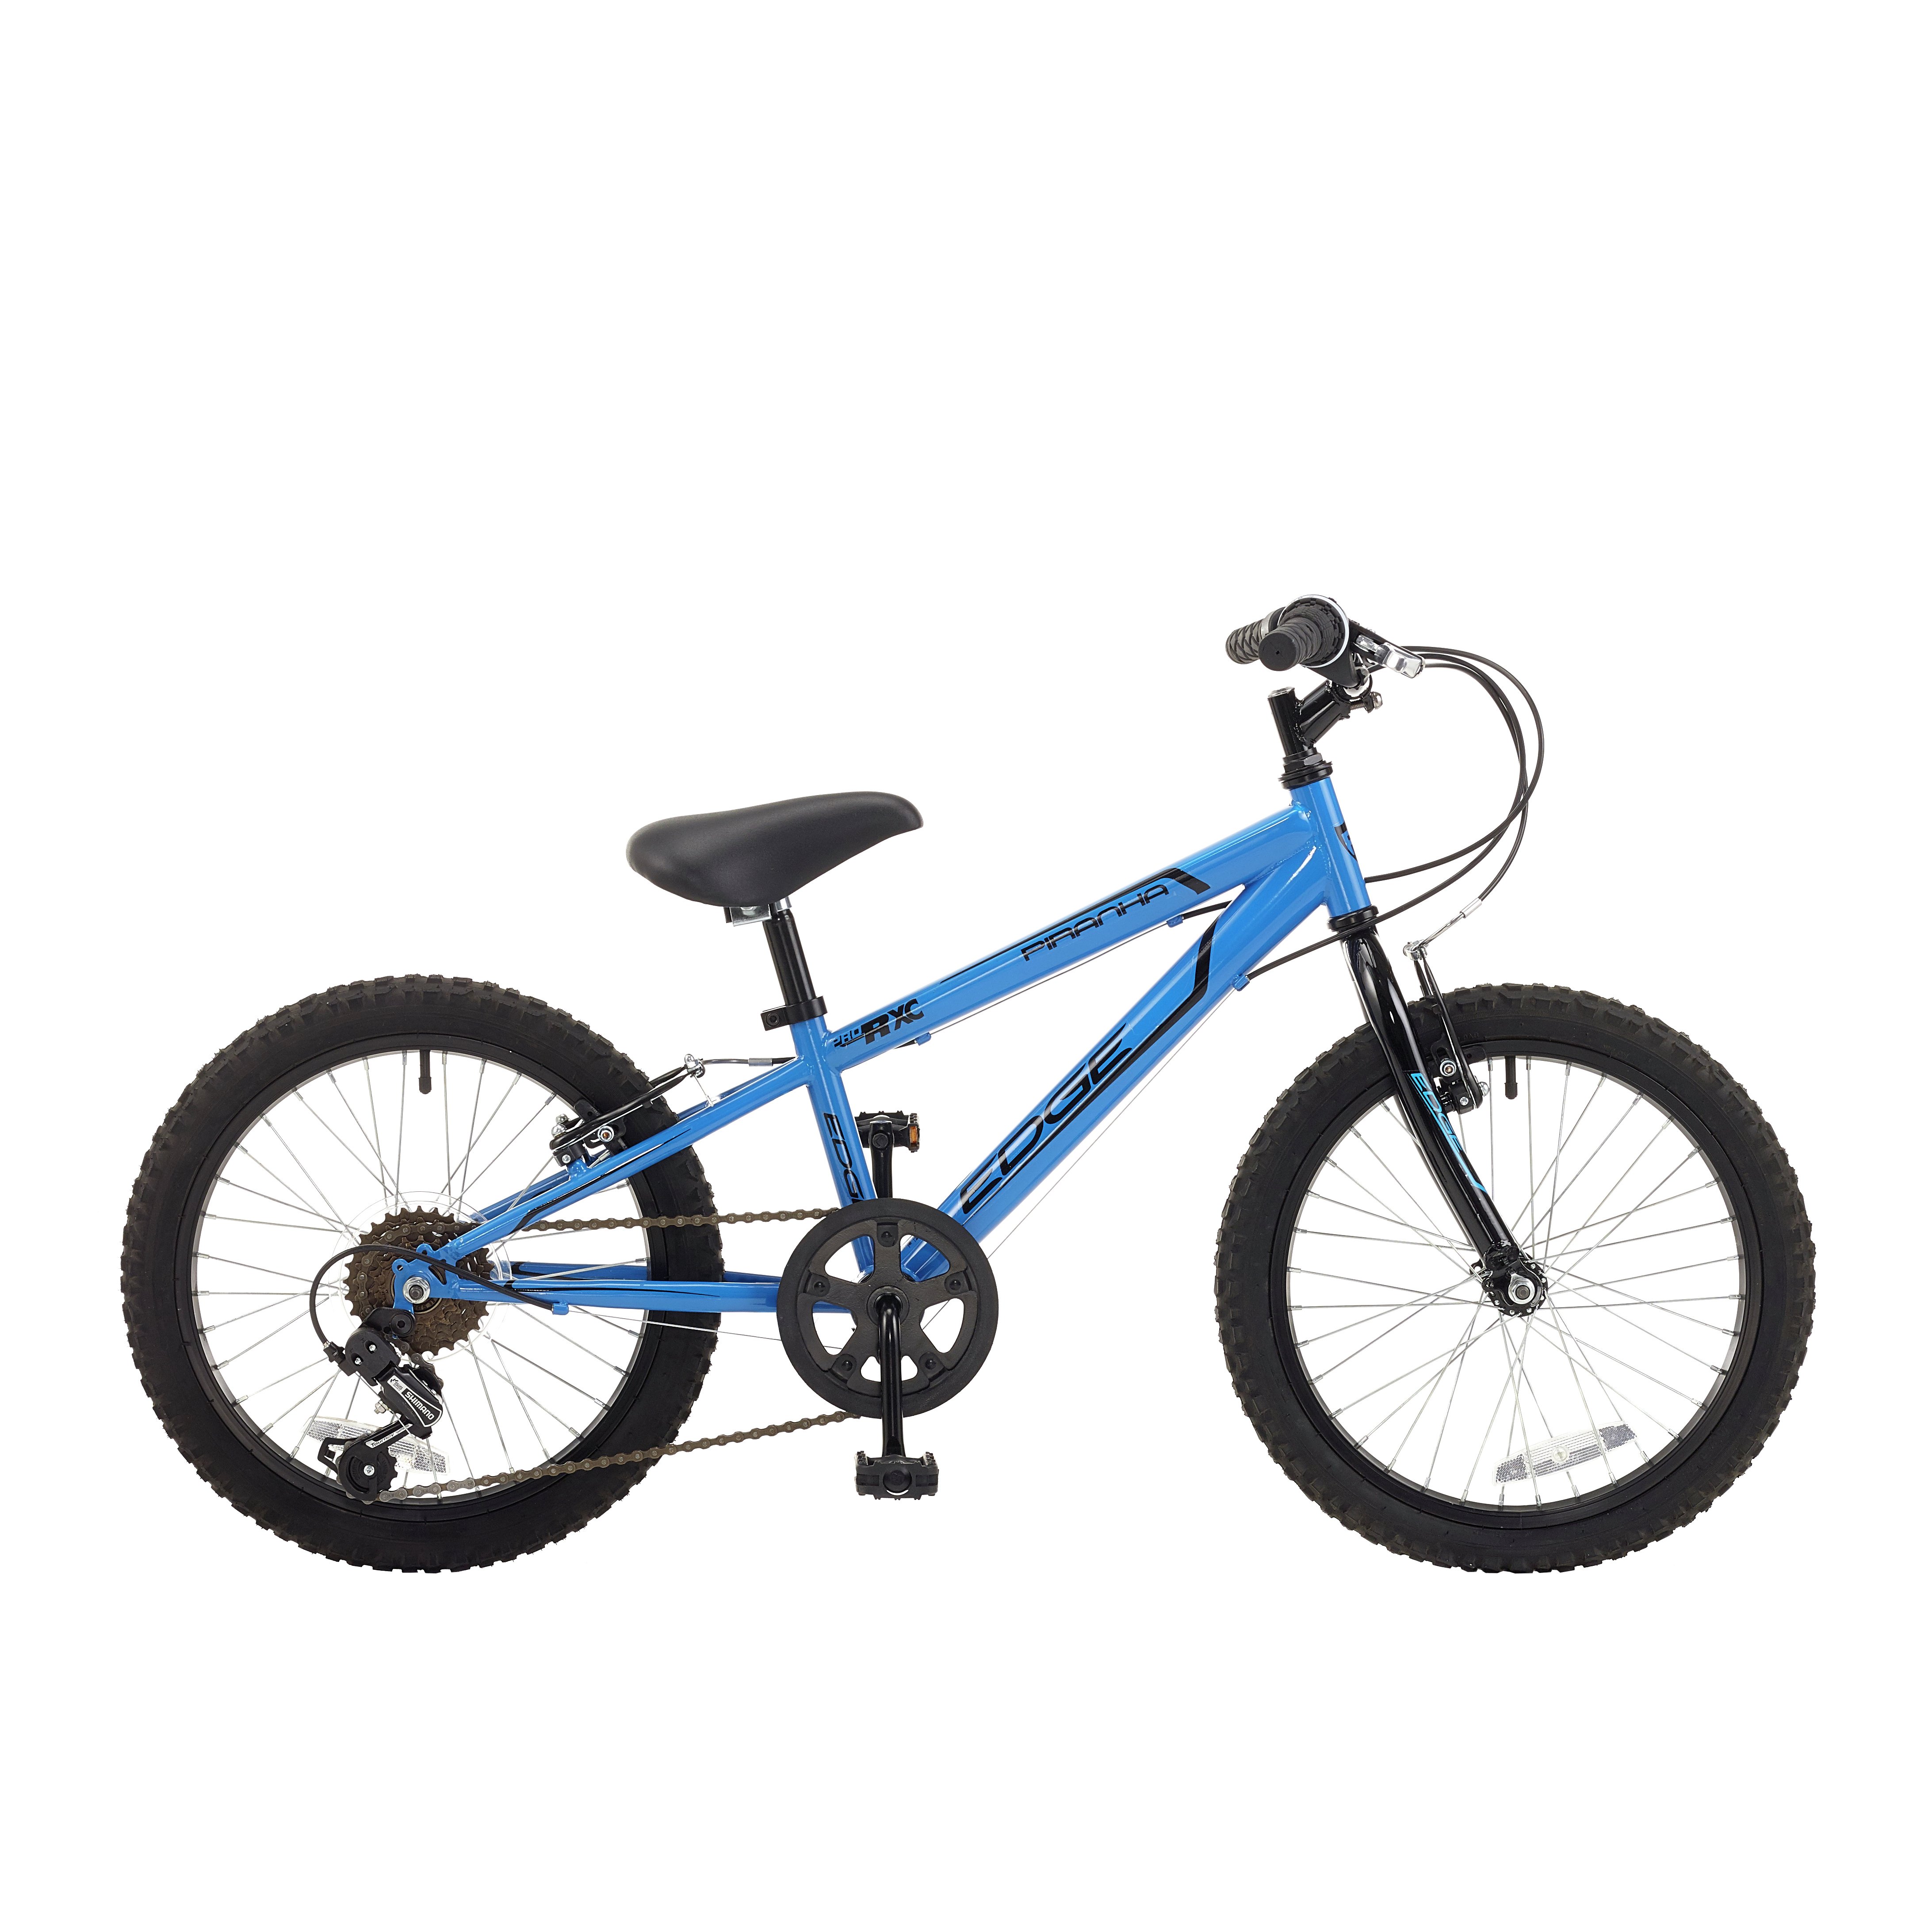 18 inch wheel mountain bike